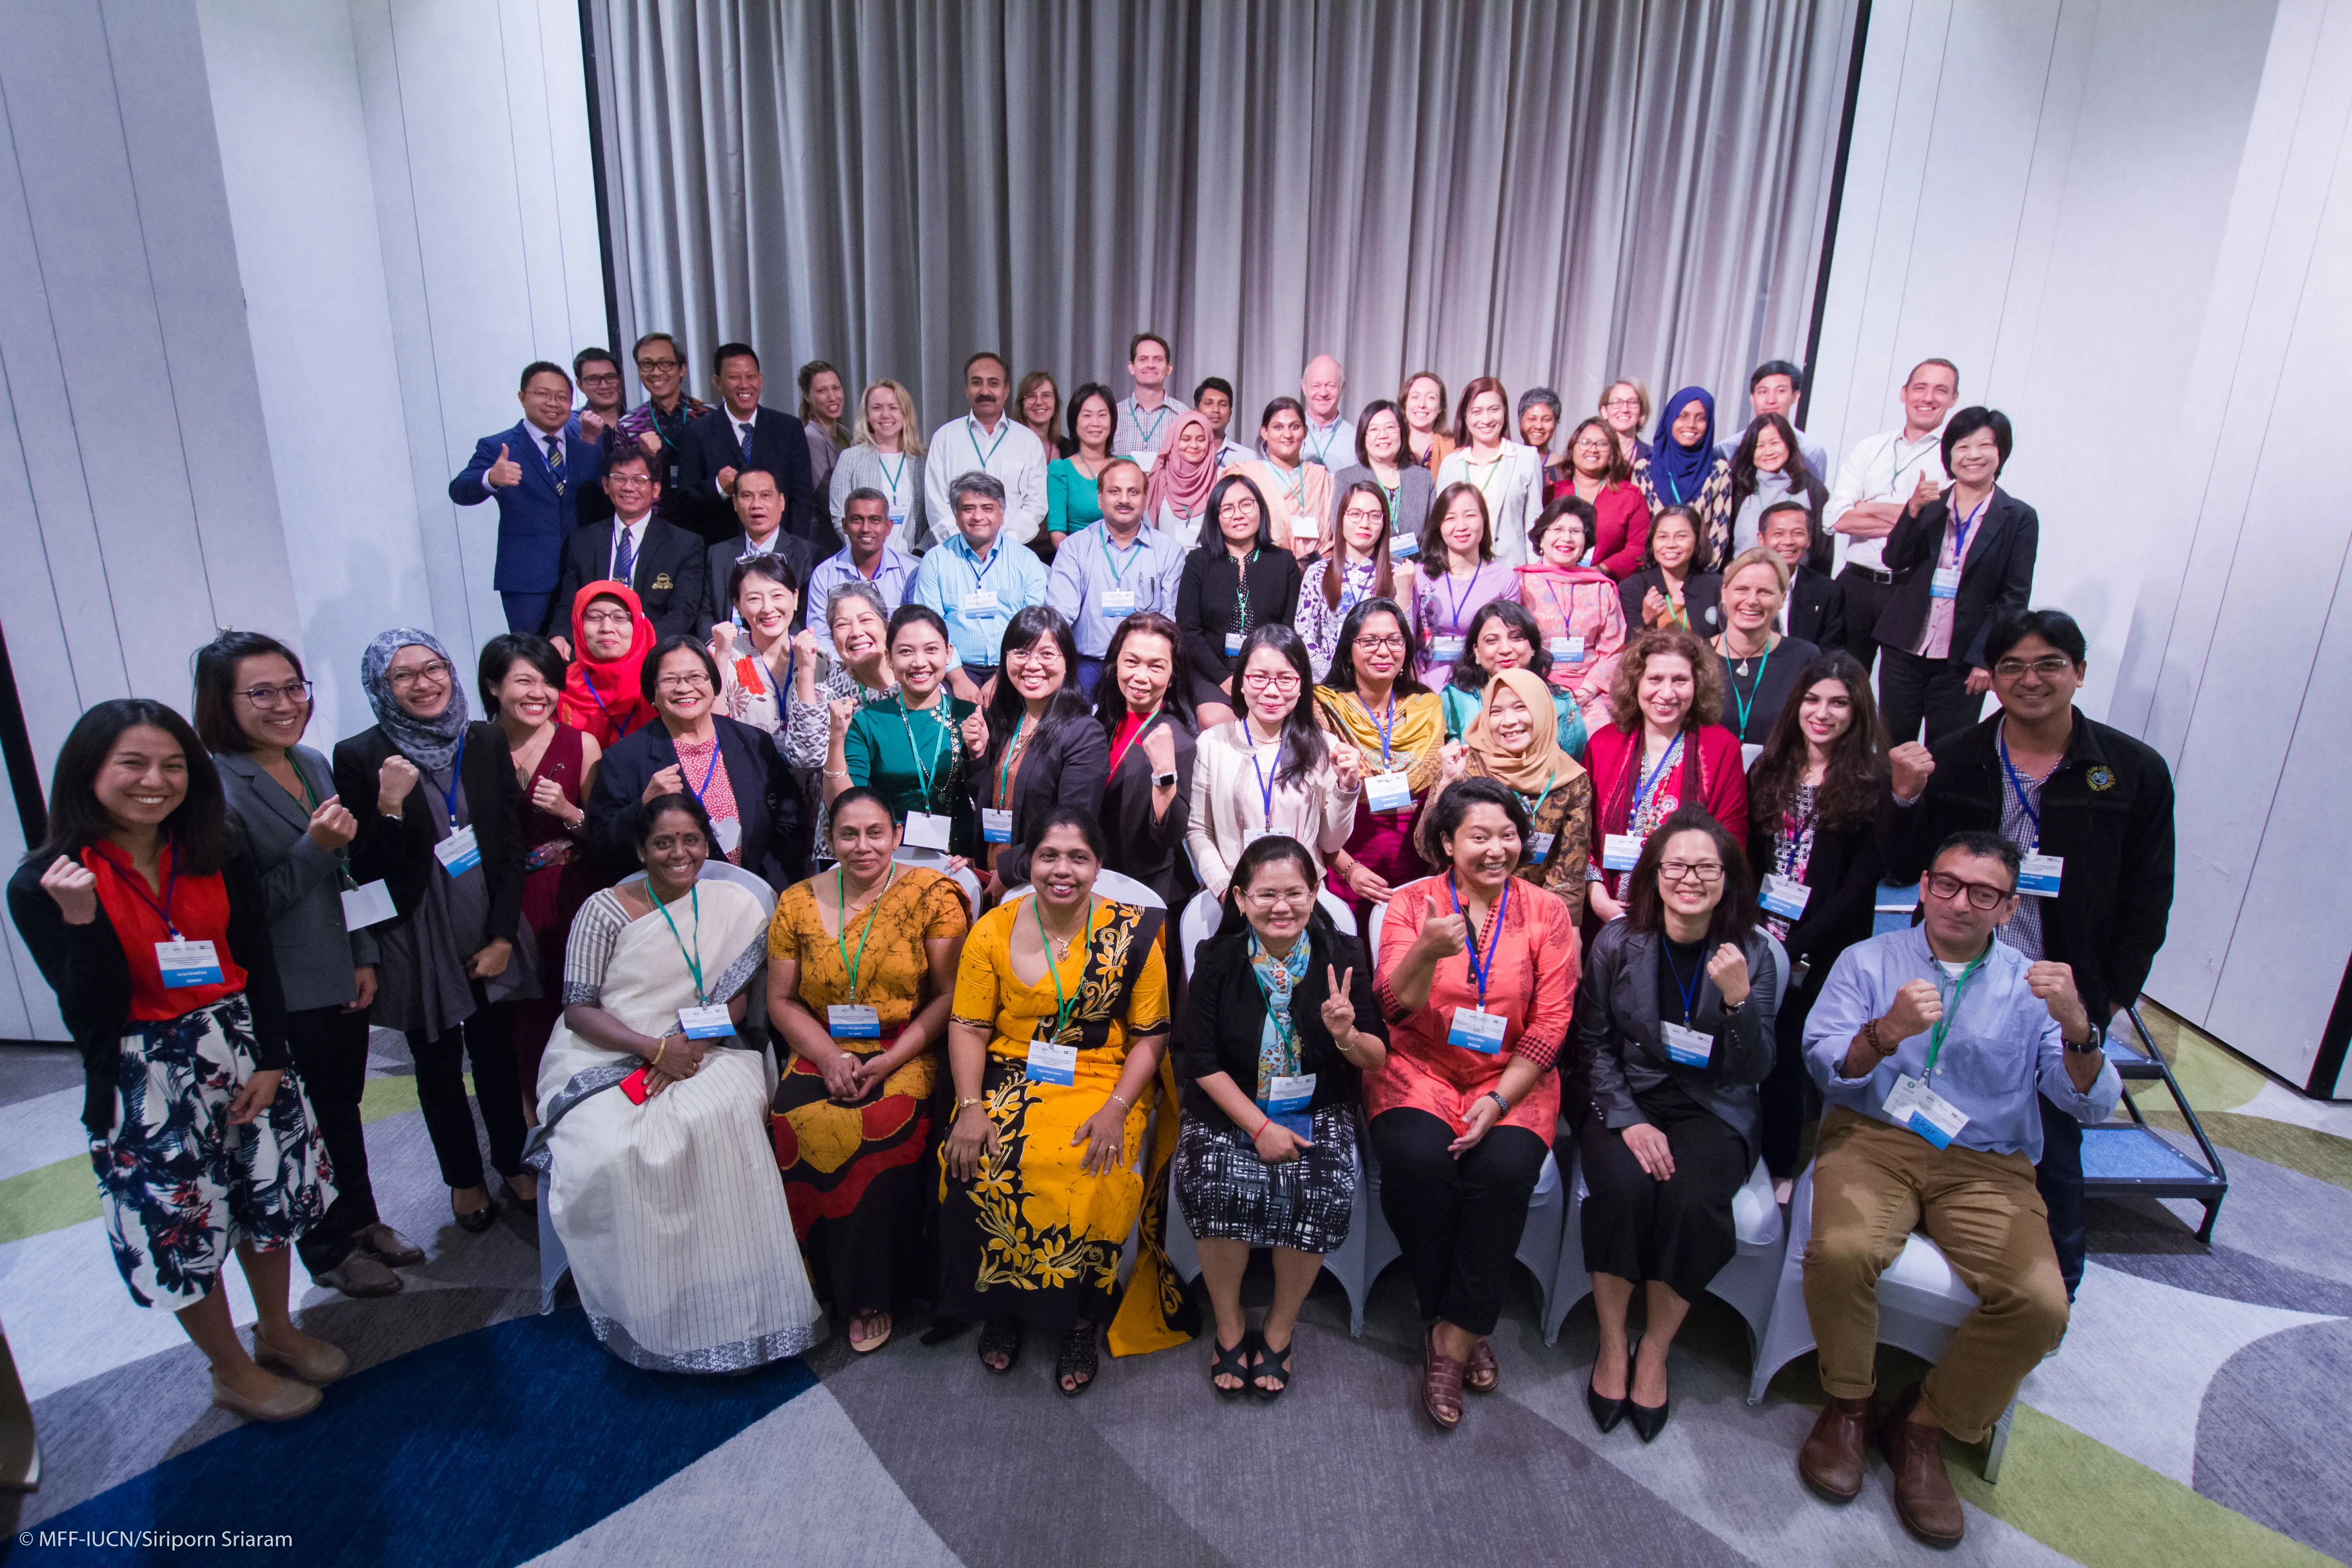 Group photo of Gender Study Dialogue participants